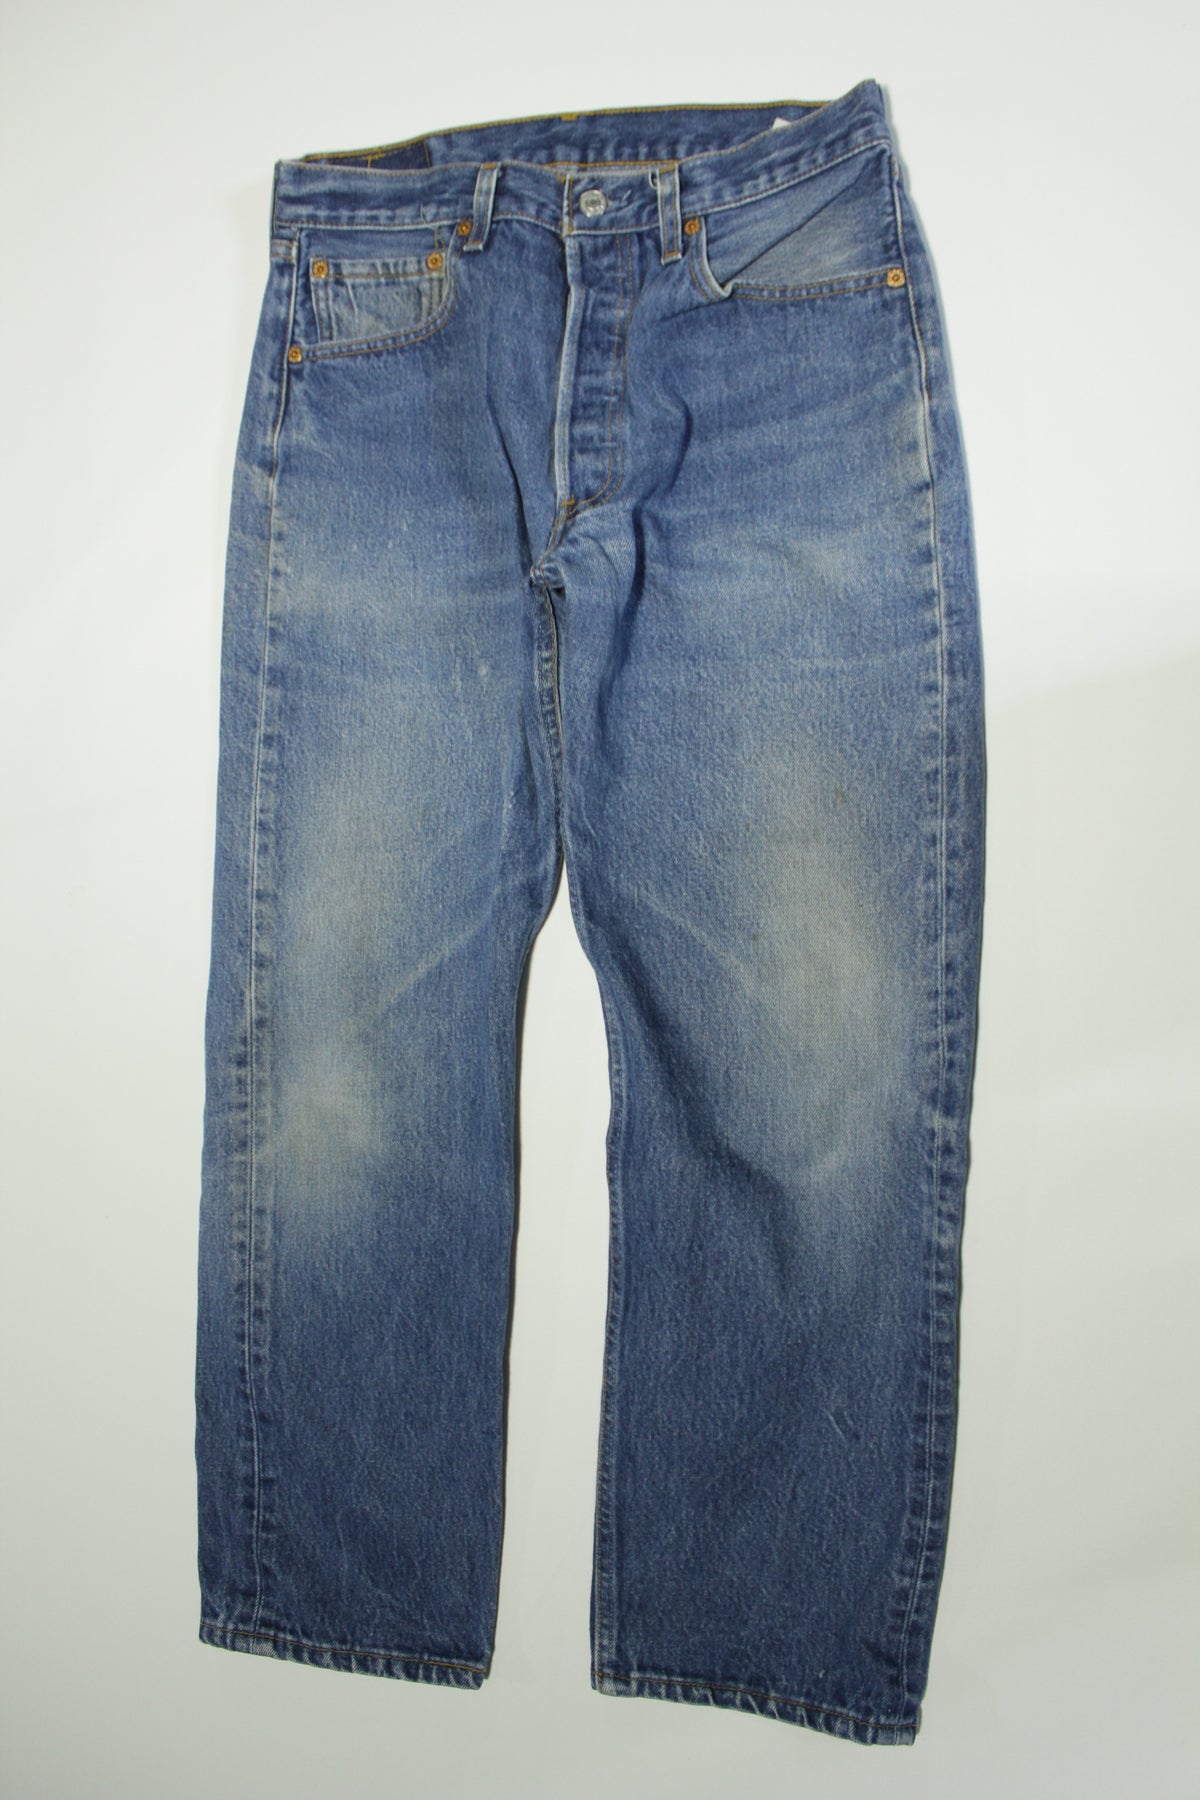 Levis 501xx Vintage 90's Made in USA Denim Blue Jeans